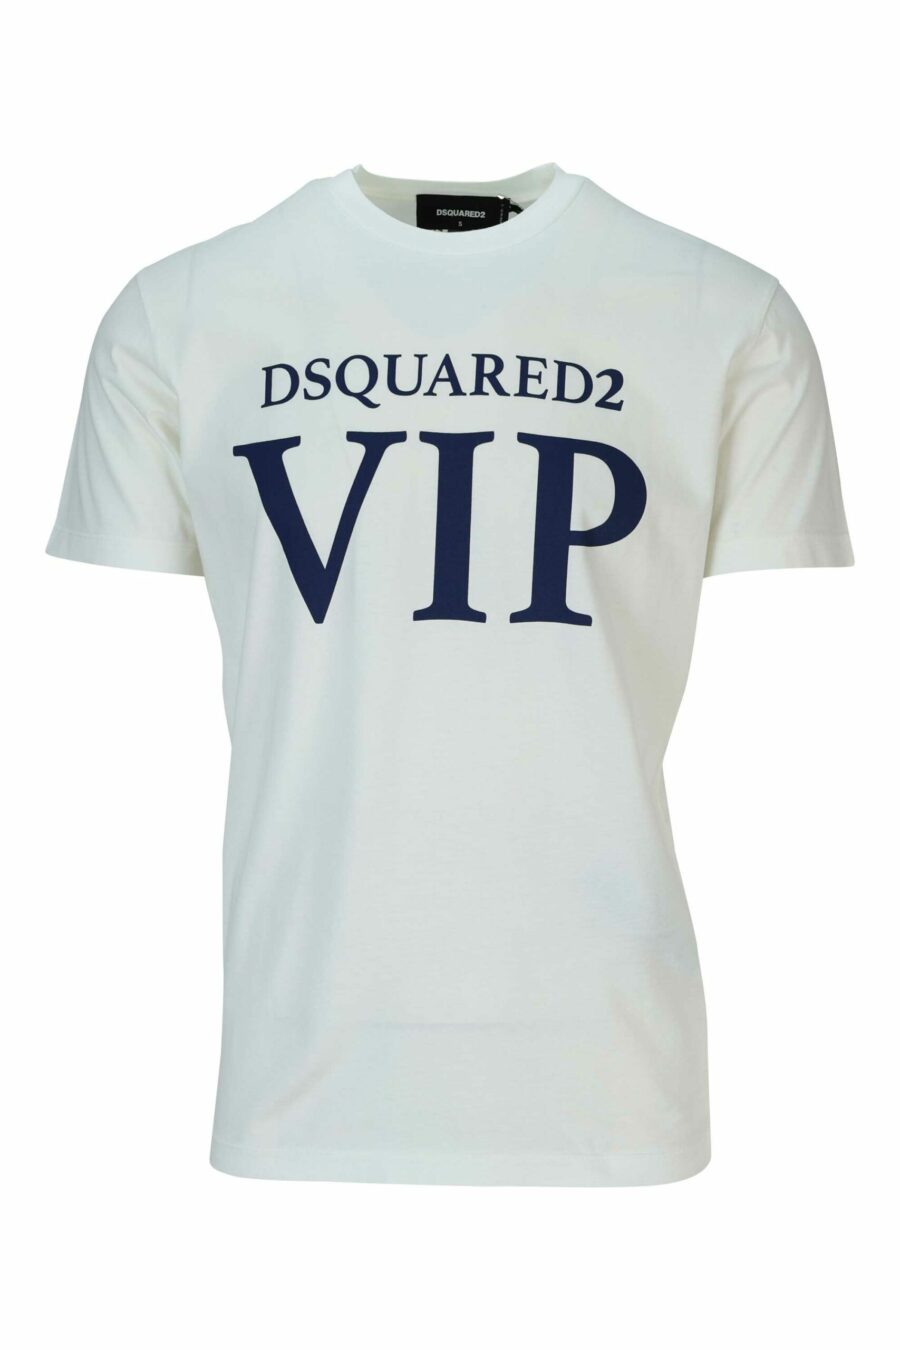 T-shirt blanc avec maxilogo "vip" - 8054148578855 scaled